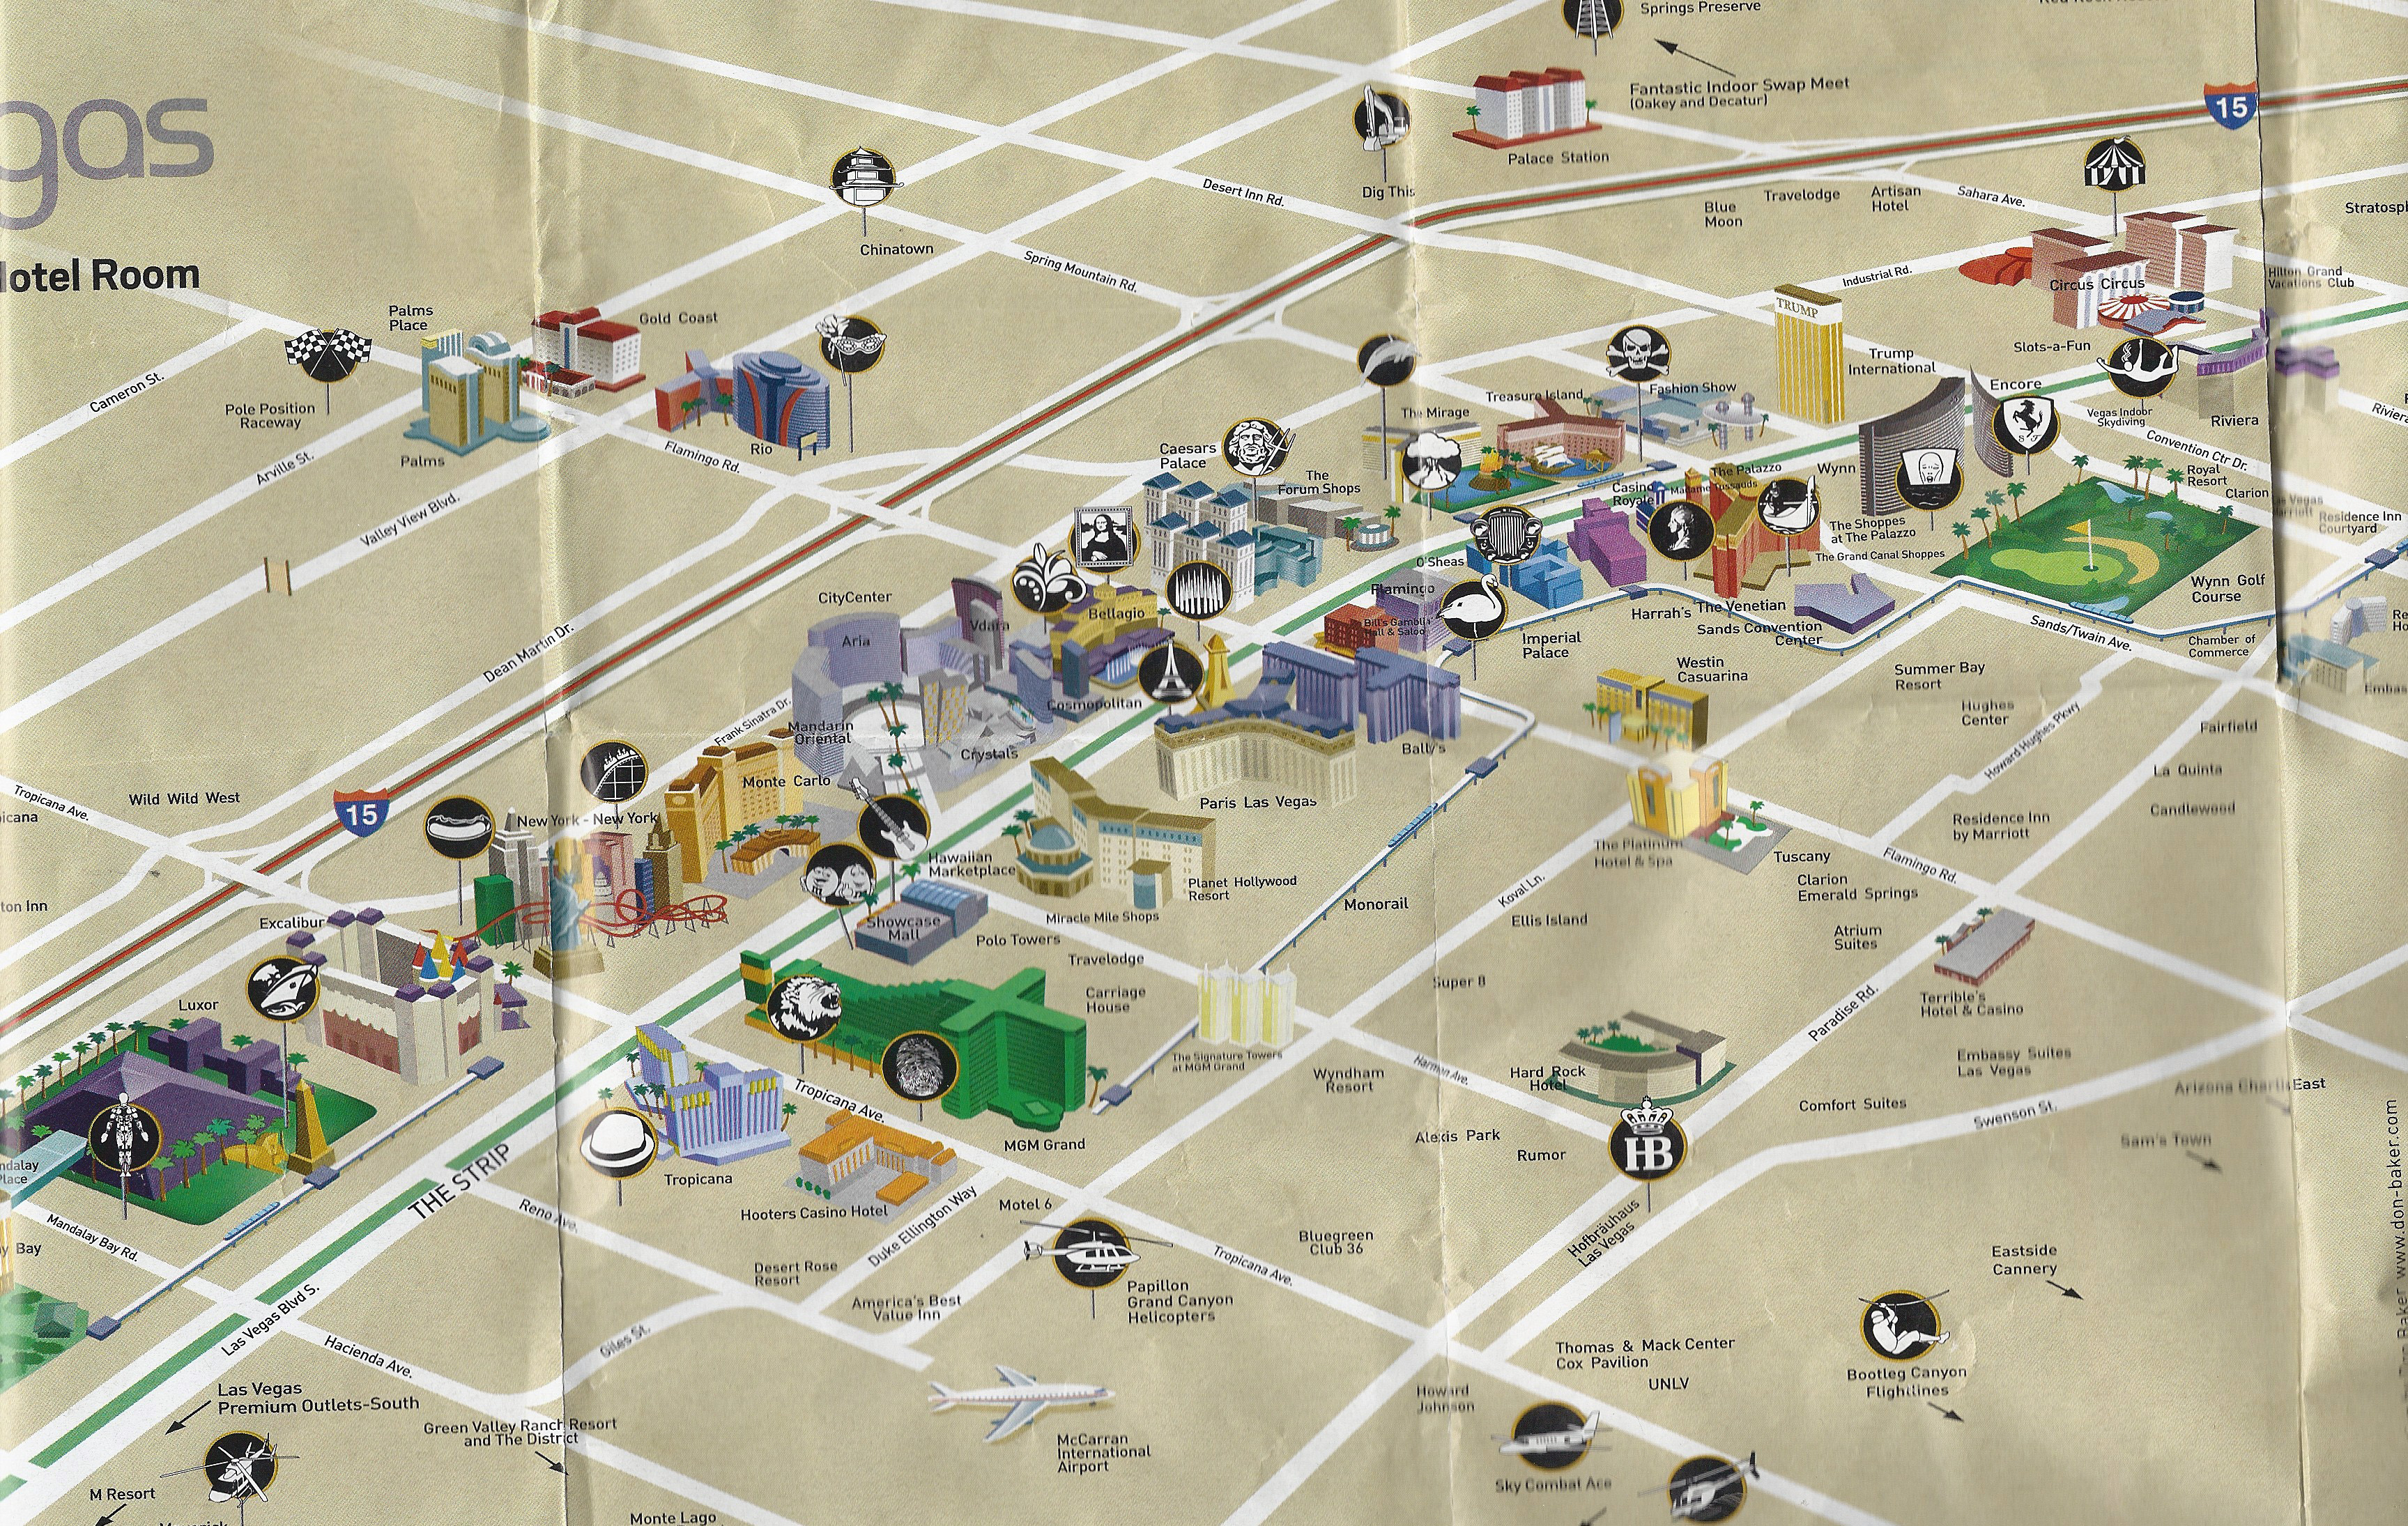 las vegas downtown casino map